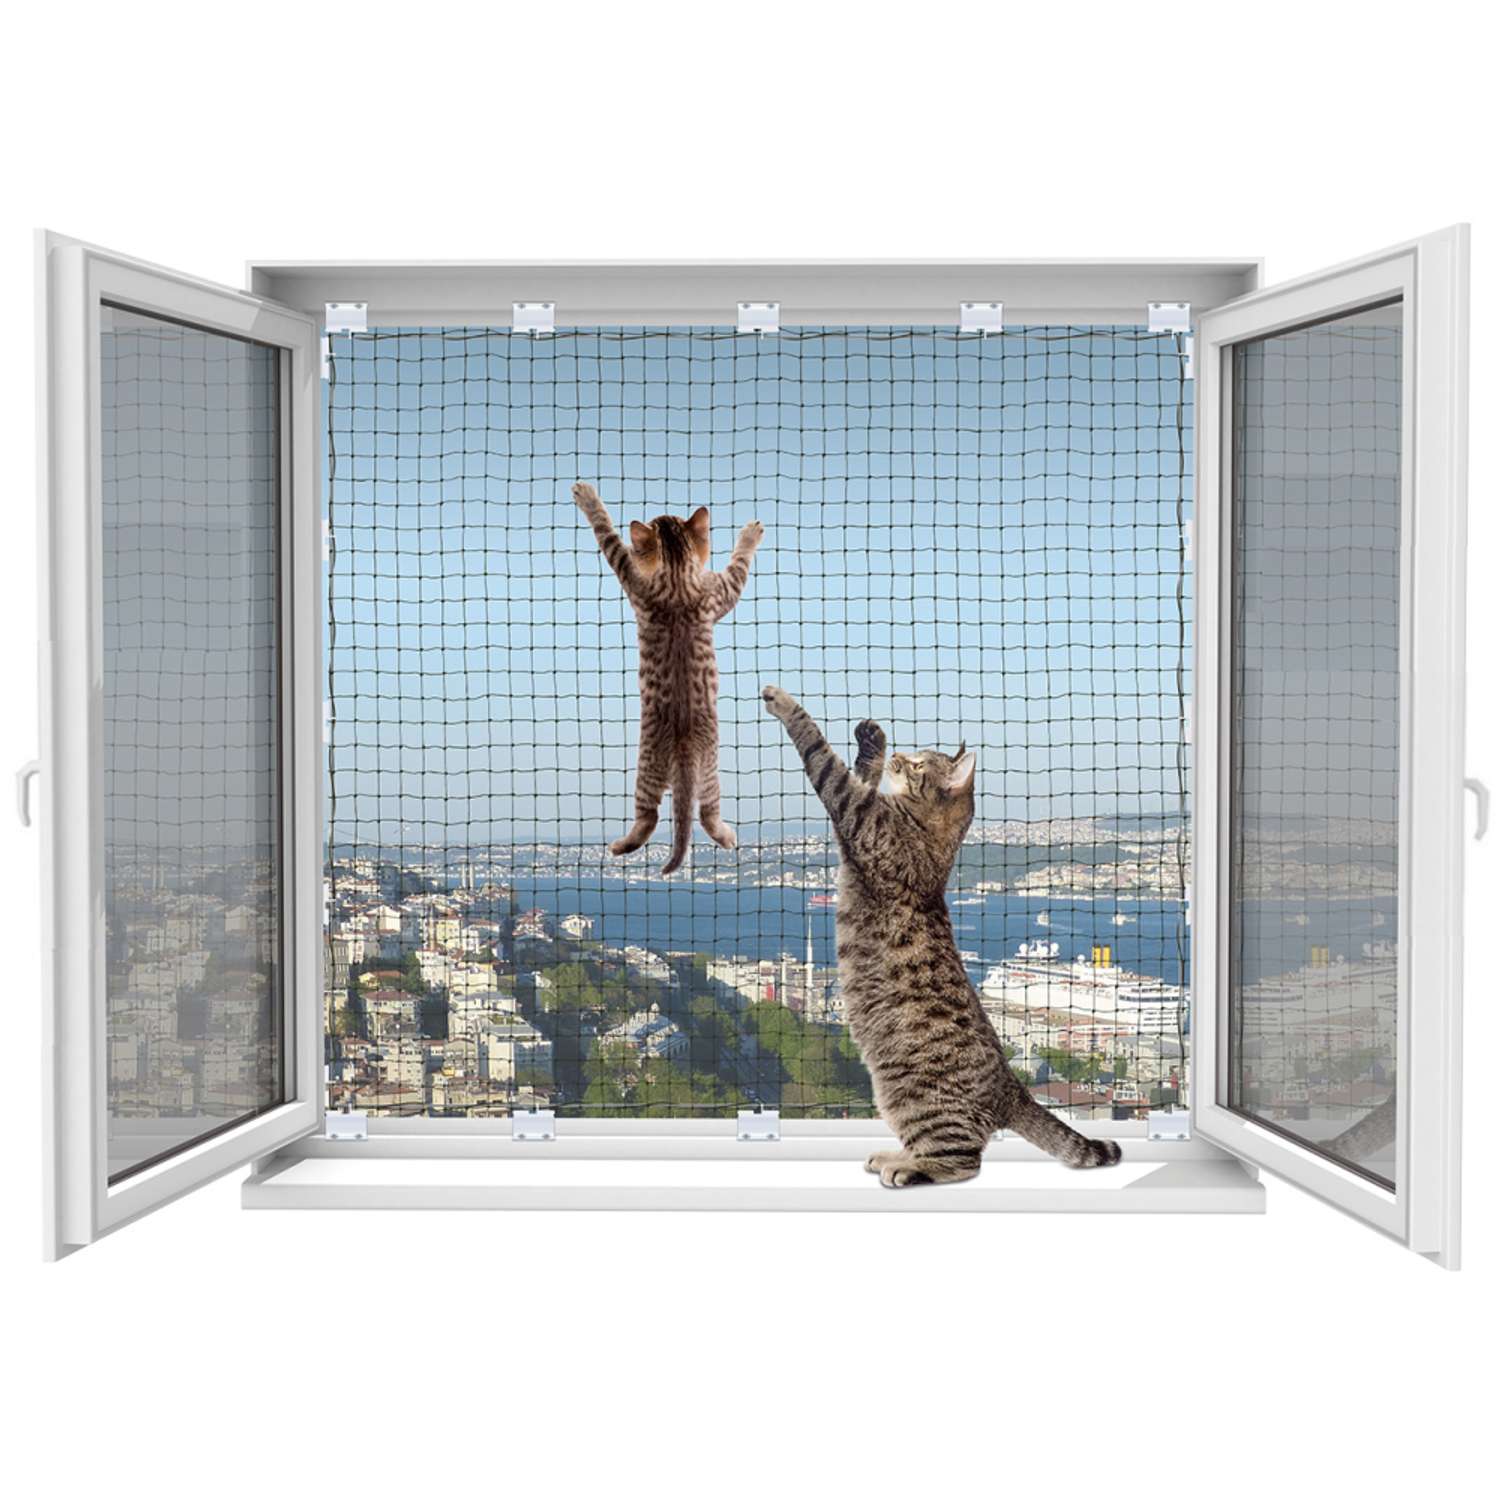 Защитная сетка WINBLOCK на окна для кошек Pets 80х140см коричневый кронштейн - фото 2